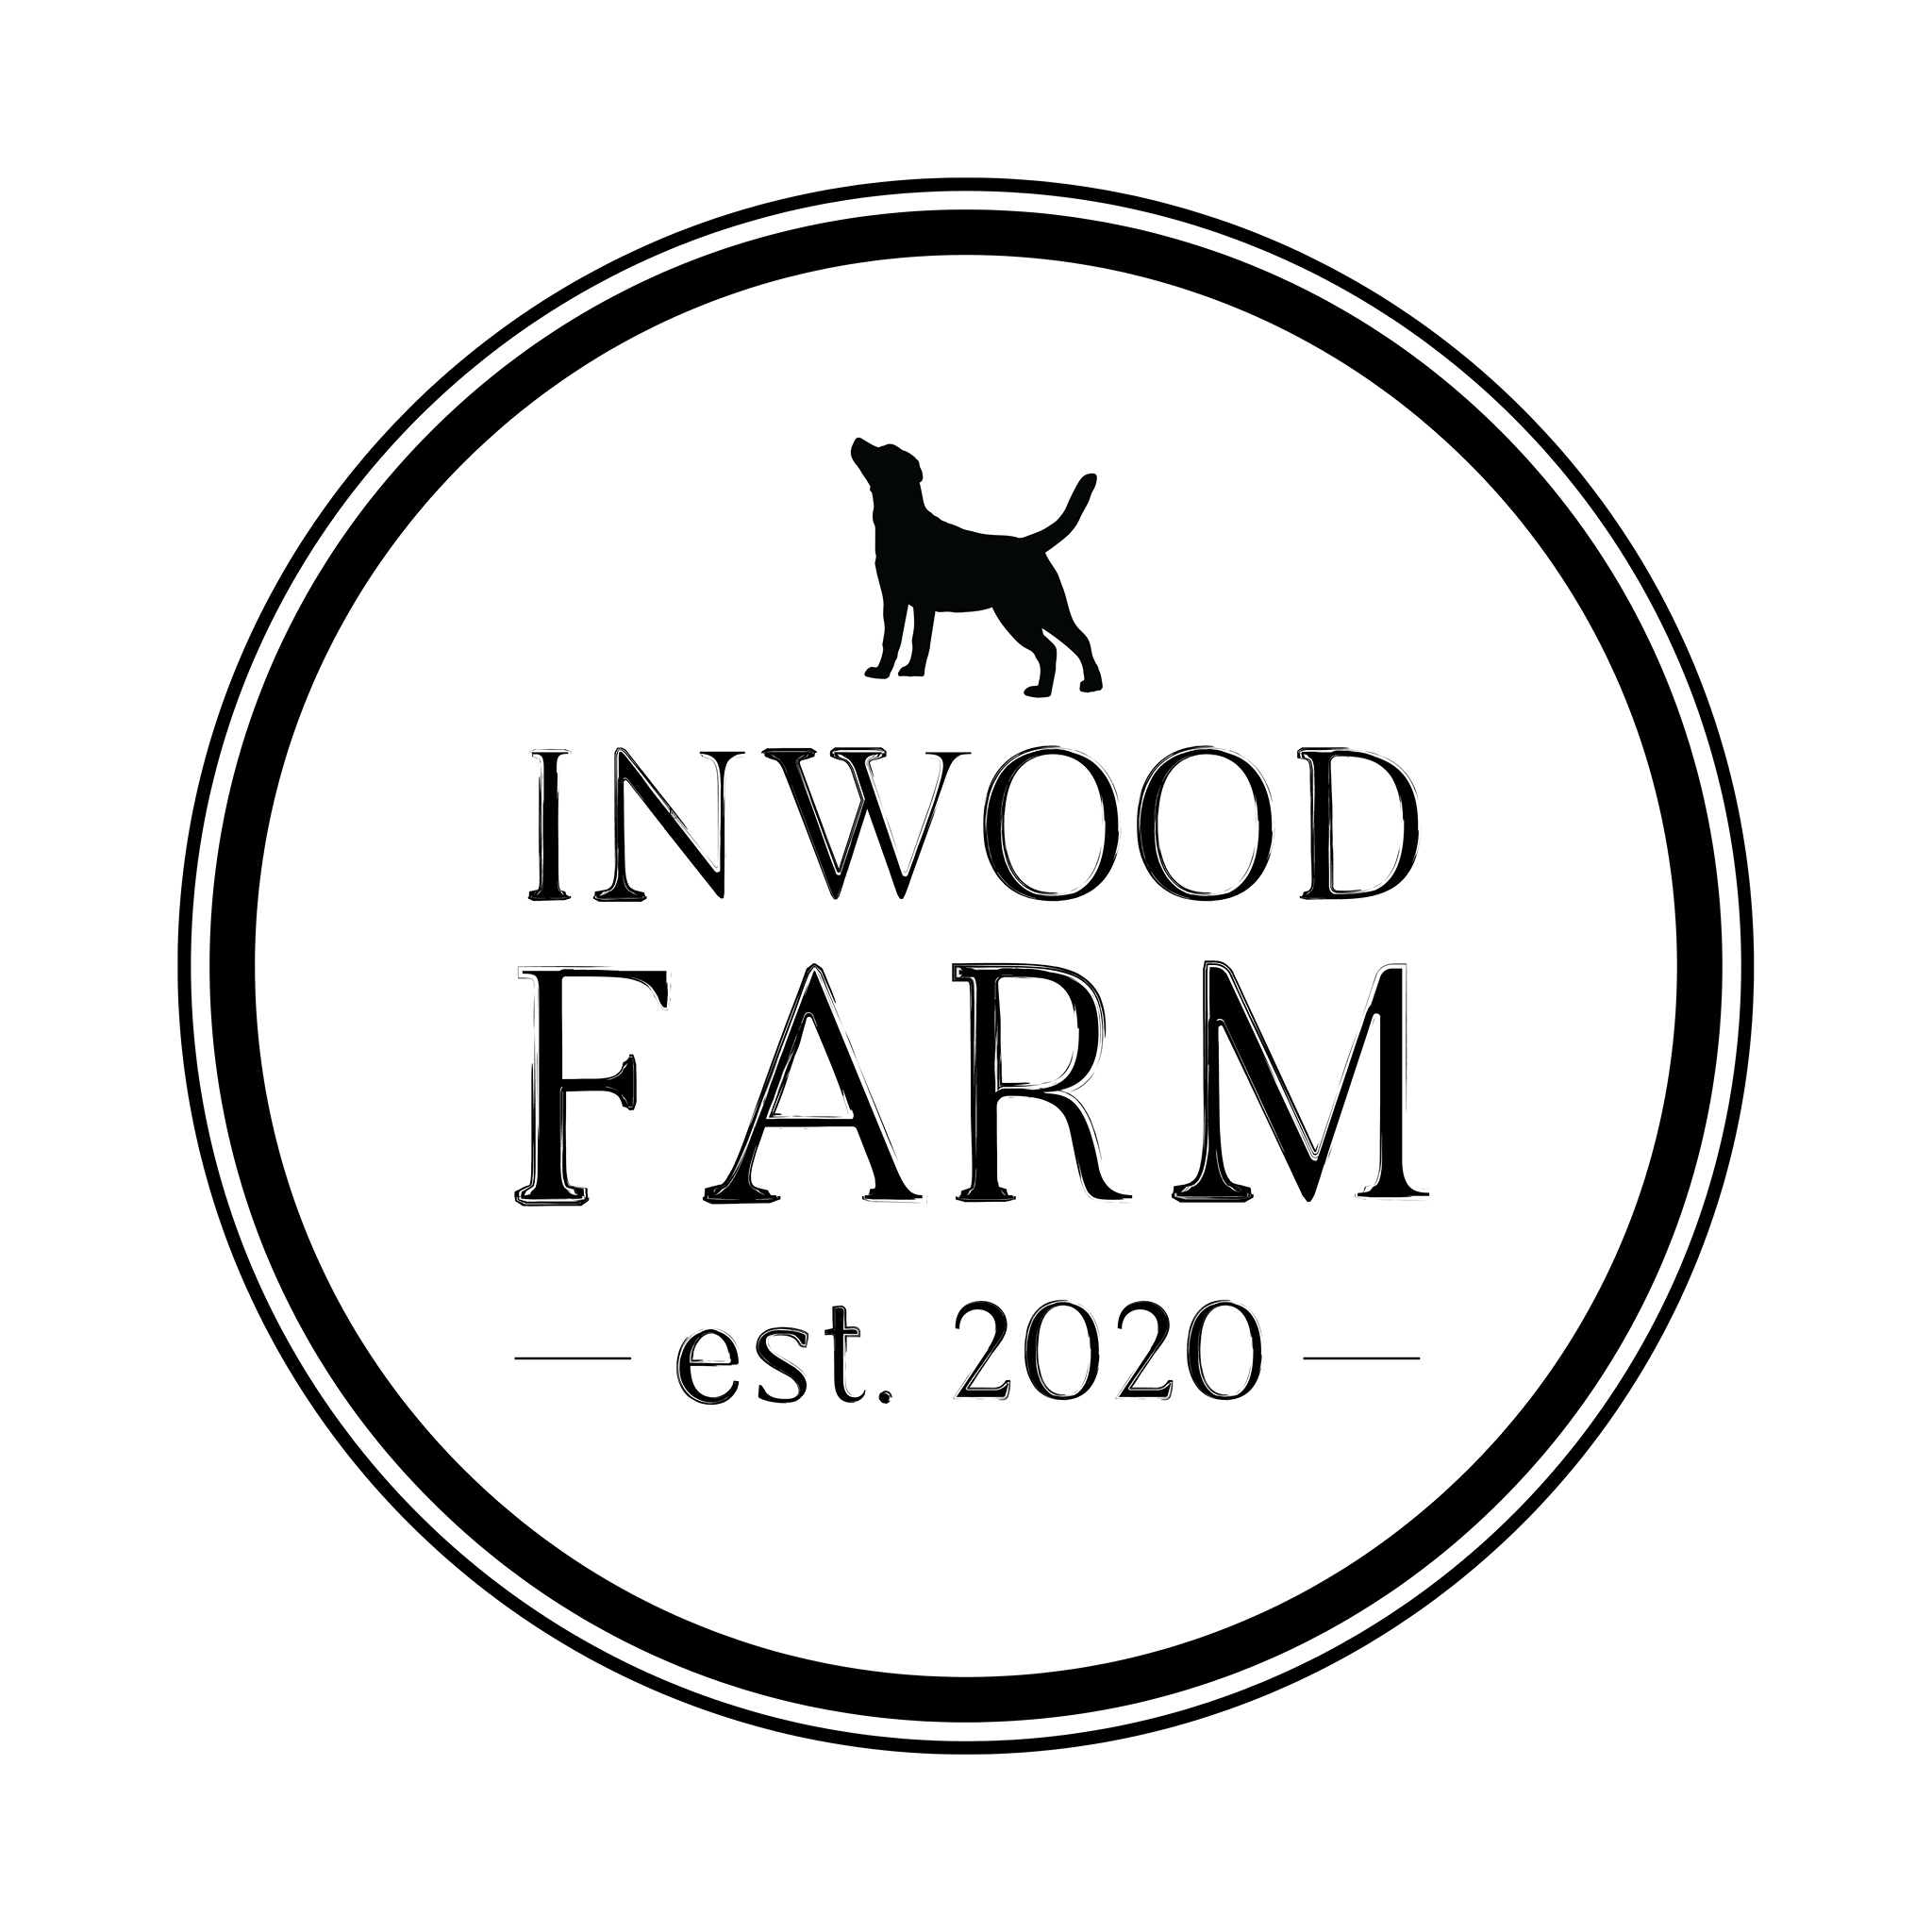 the inwood farm